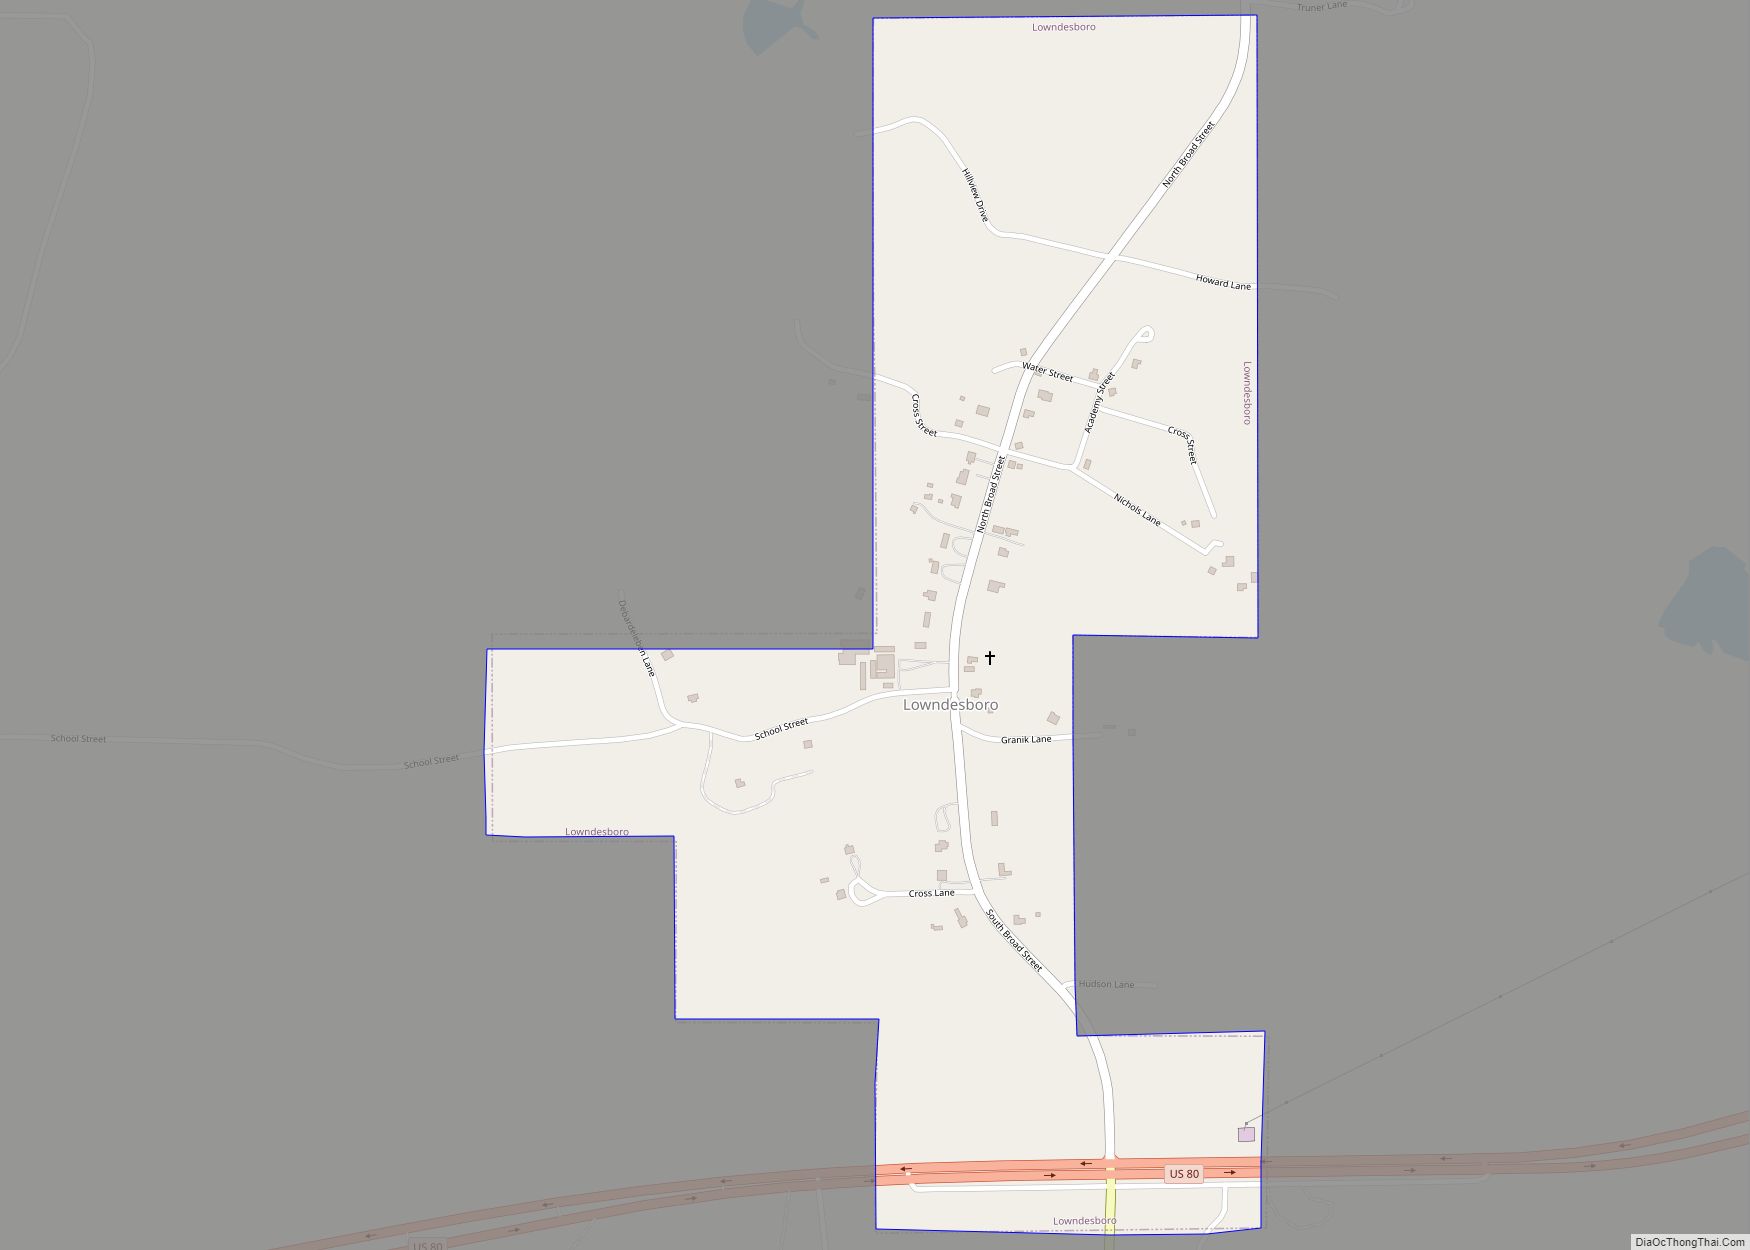 Map of Lowndesboro town